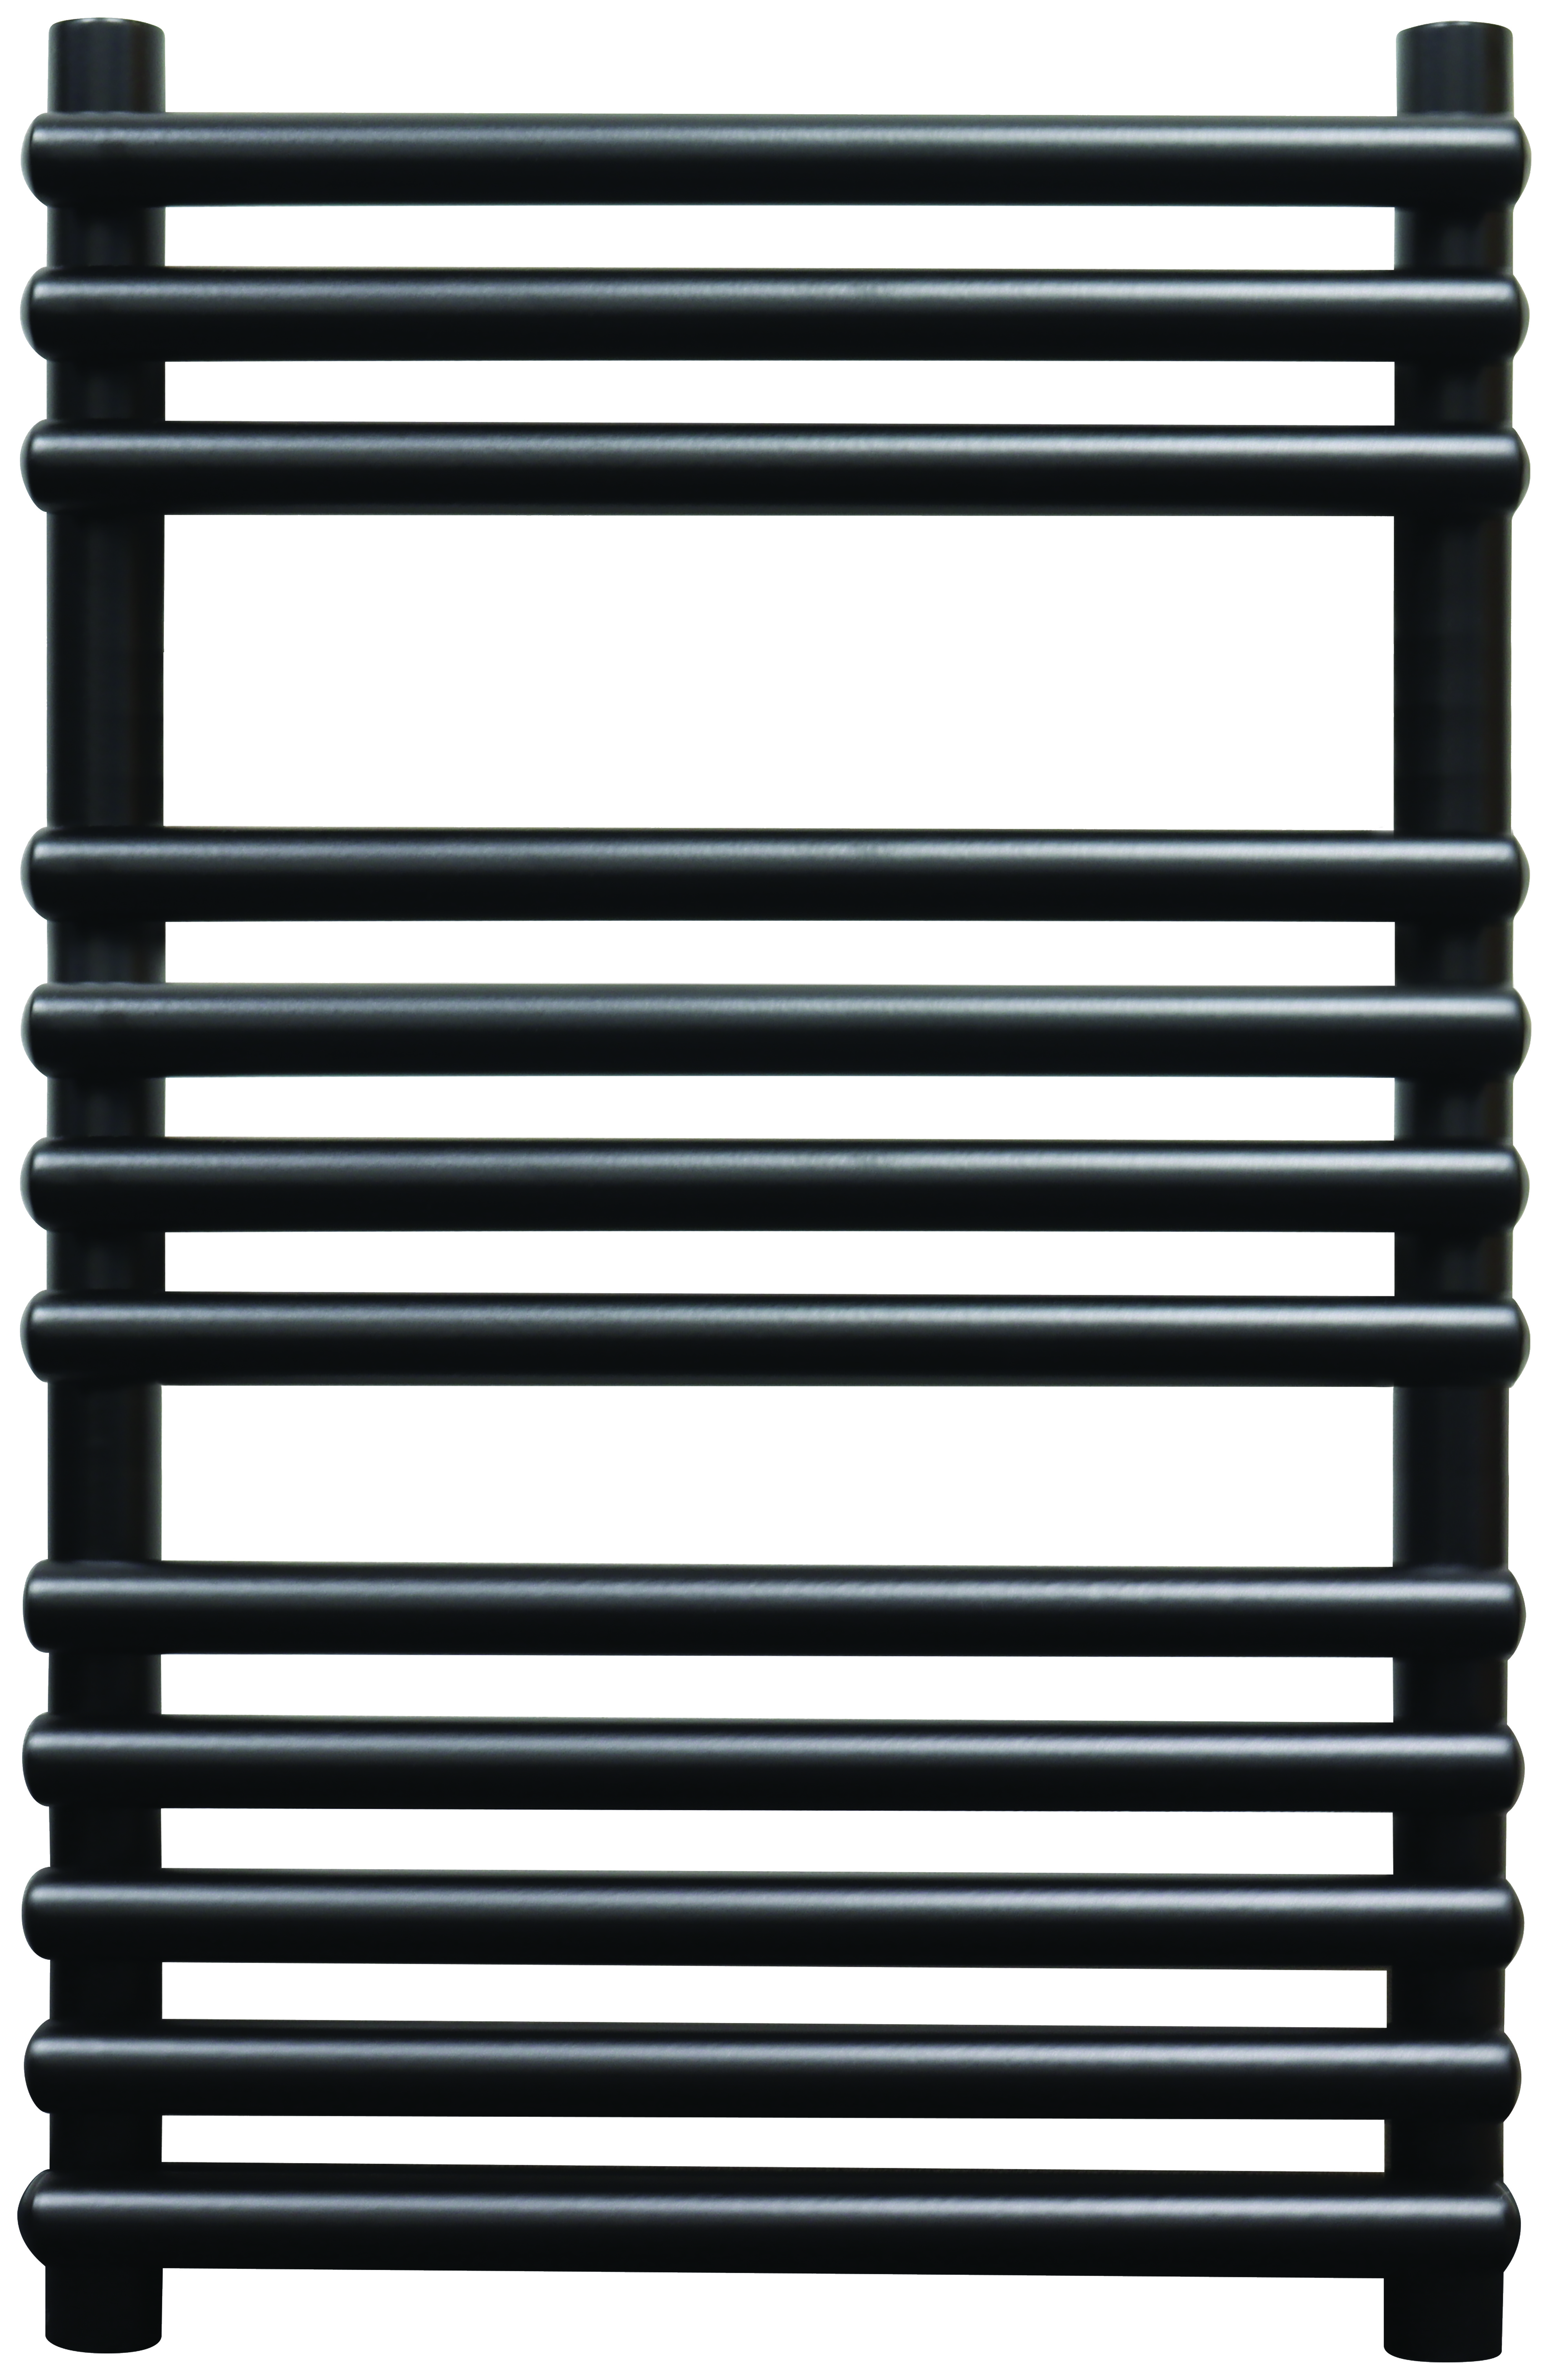 Towelrads Double Iridio Matt Black Towel Radiator - 1500 x 500mm